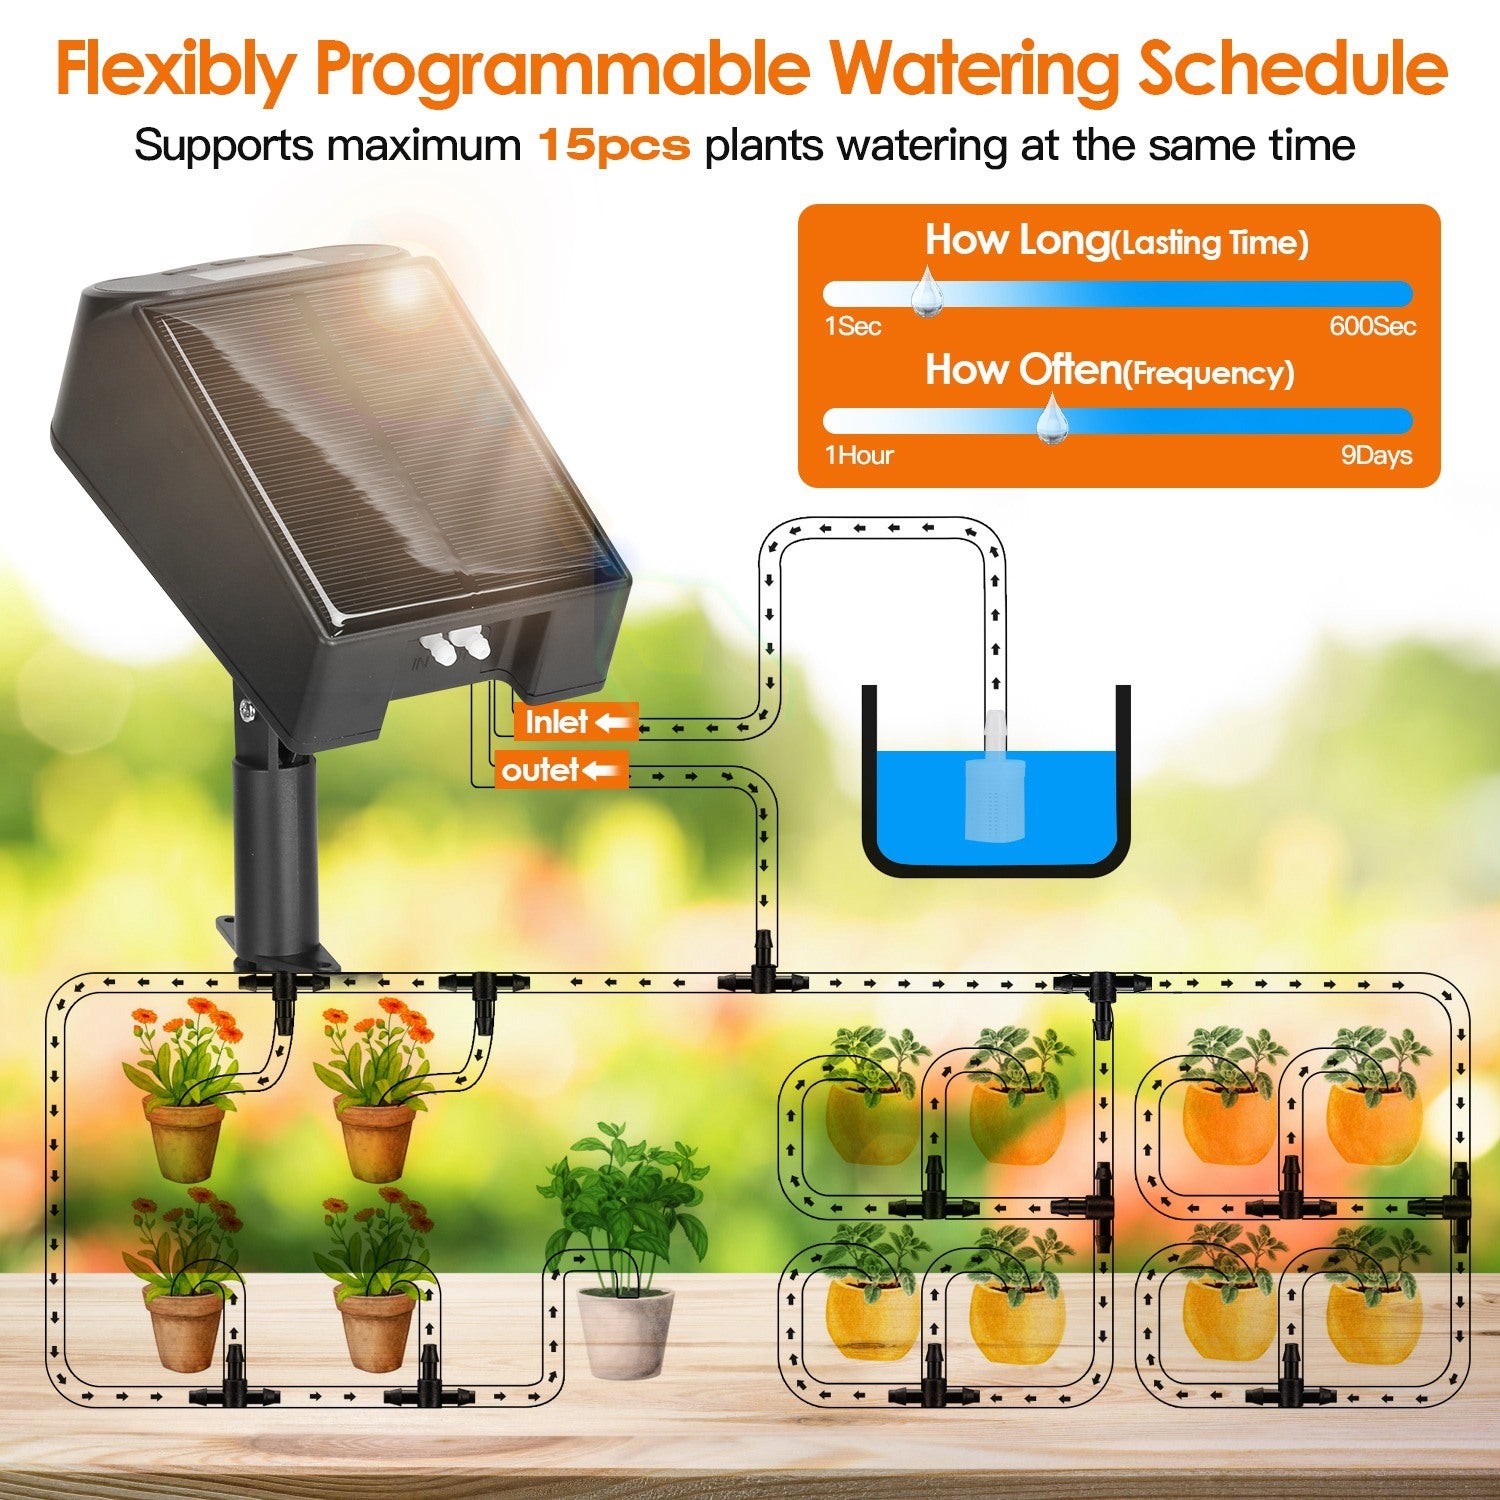 Solar Powered Drip Irrigation System